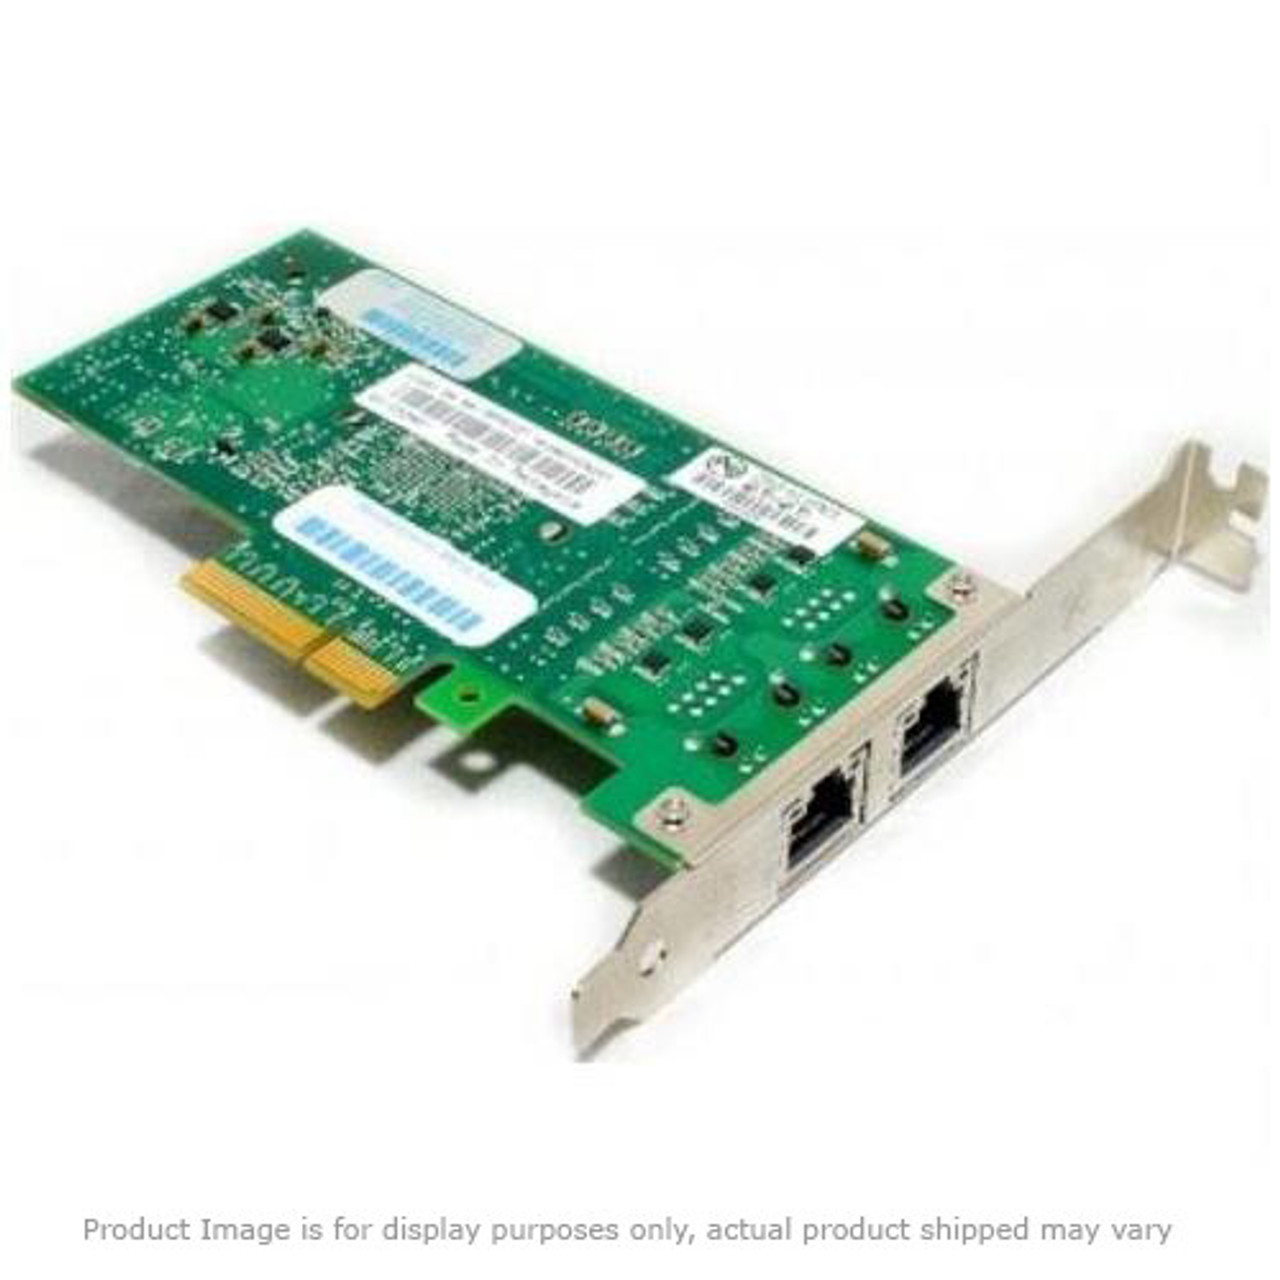 02-0287-002 3com PCI Networking Card